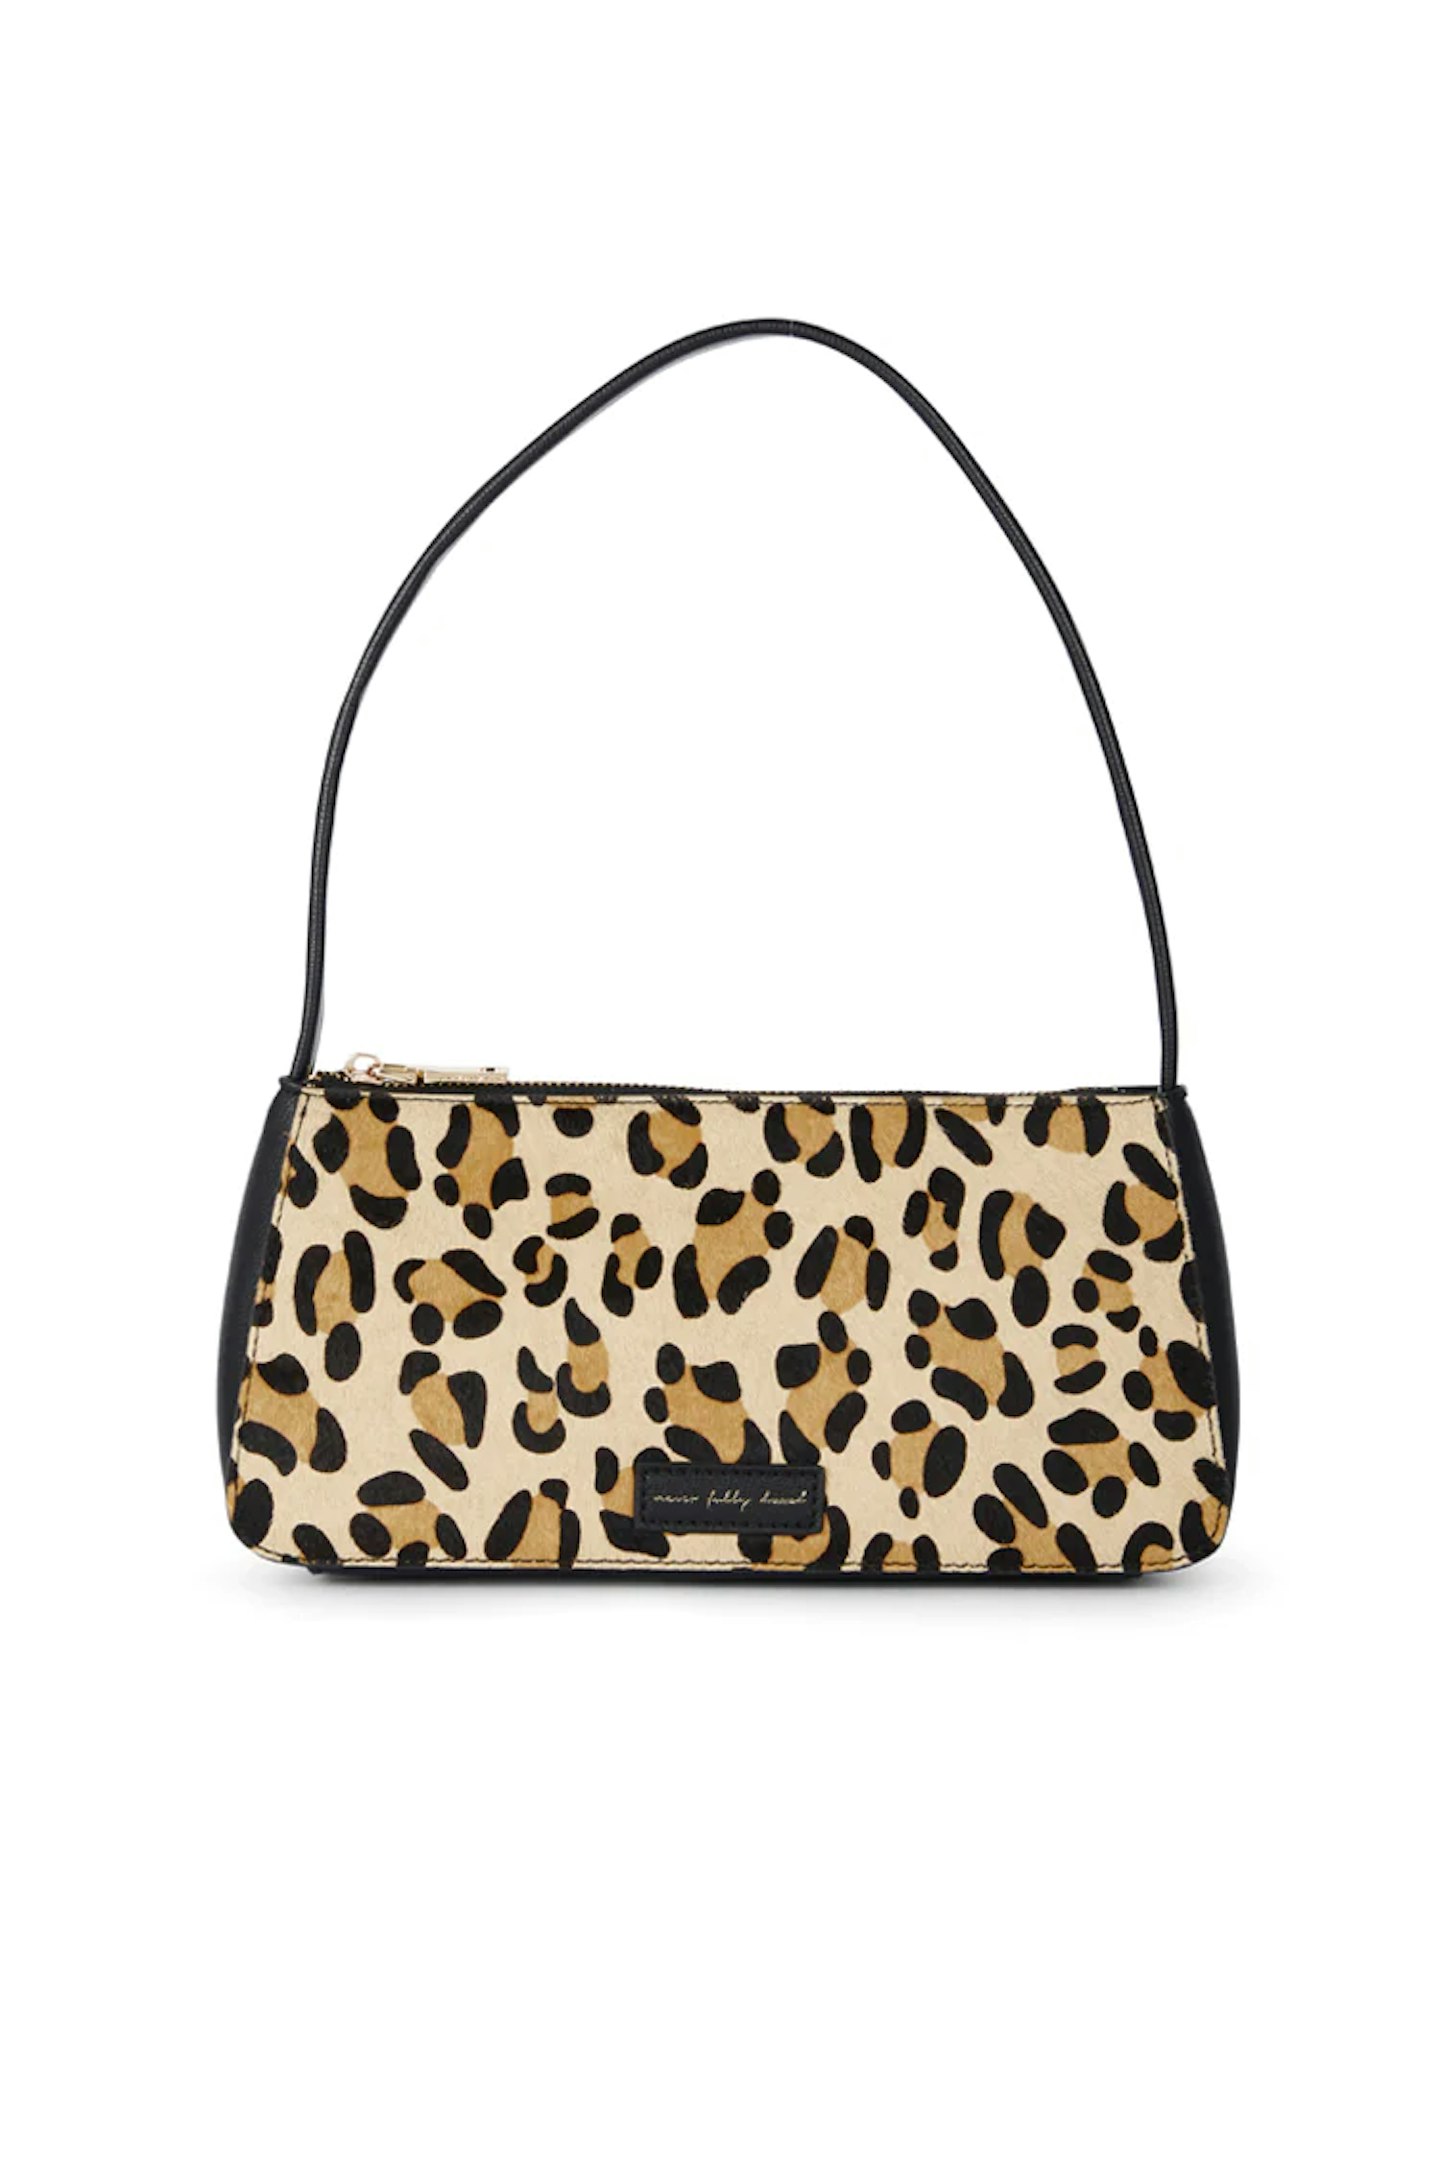 Never Fully Dressed Leopard Ponyskin Handbag